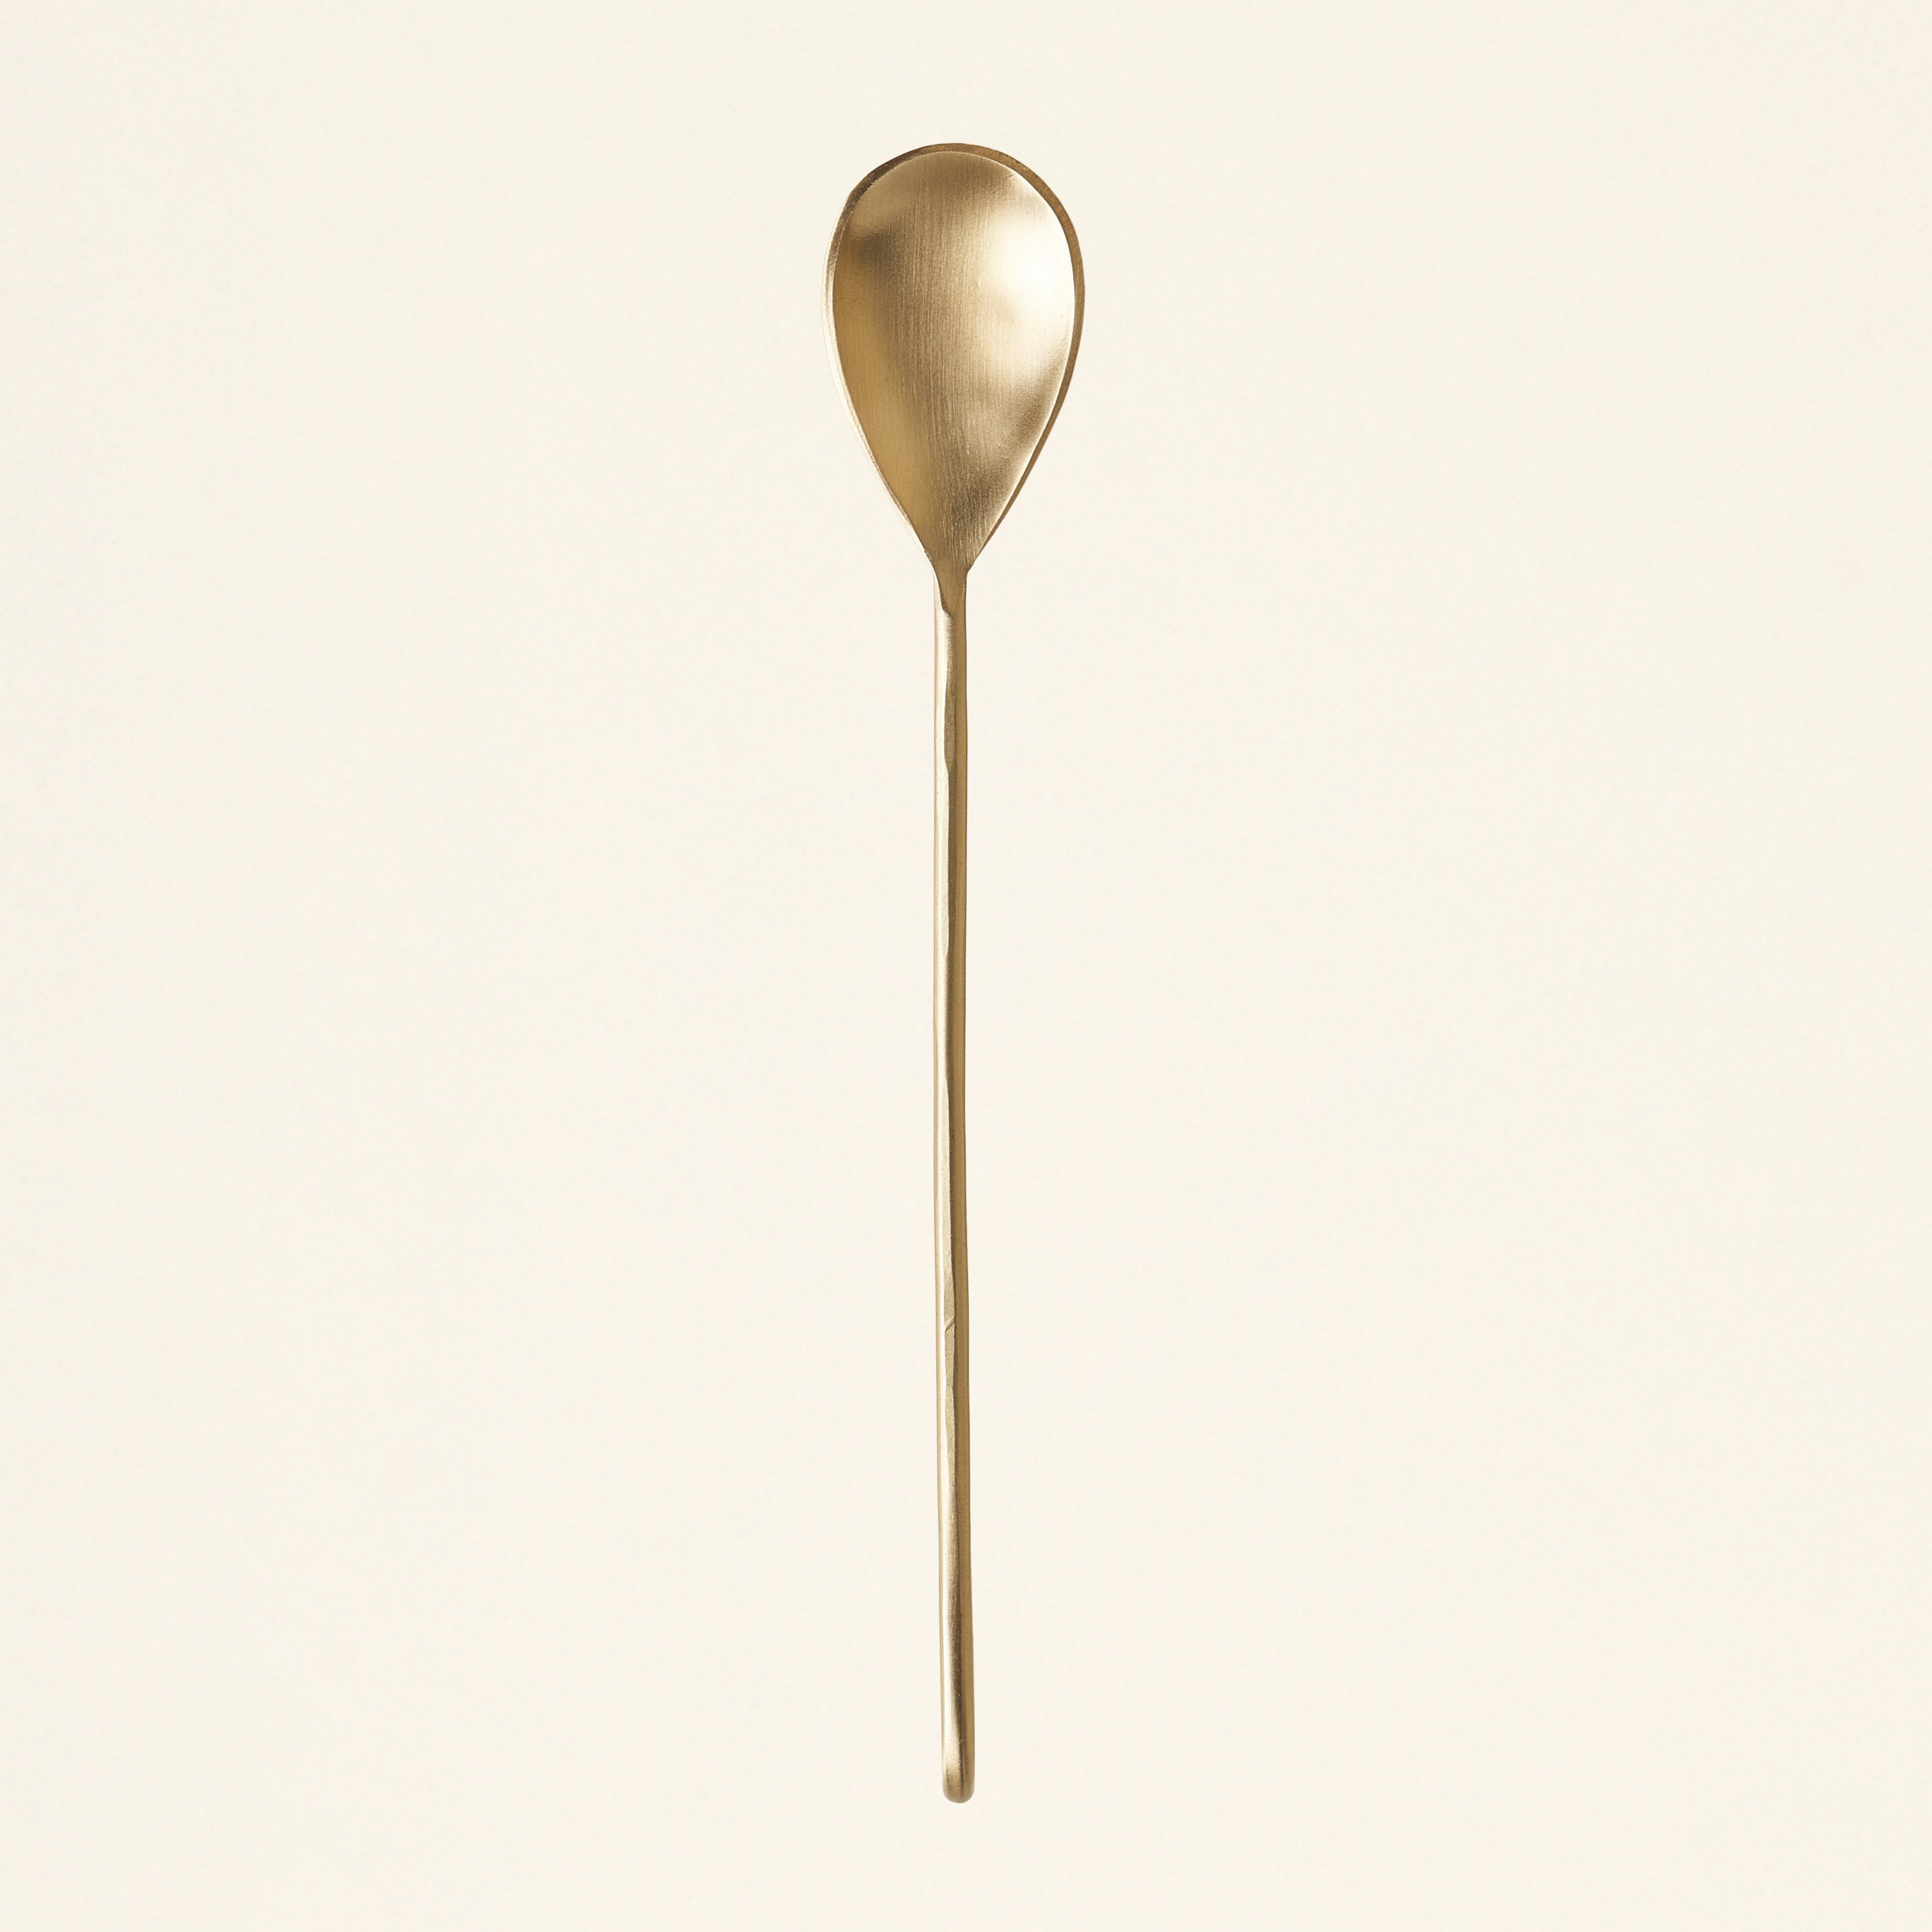 Brass Jar Spoon